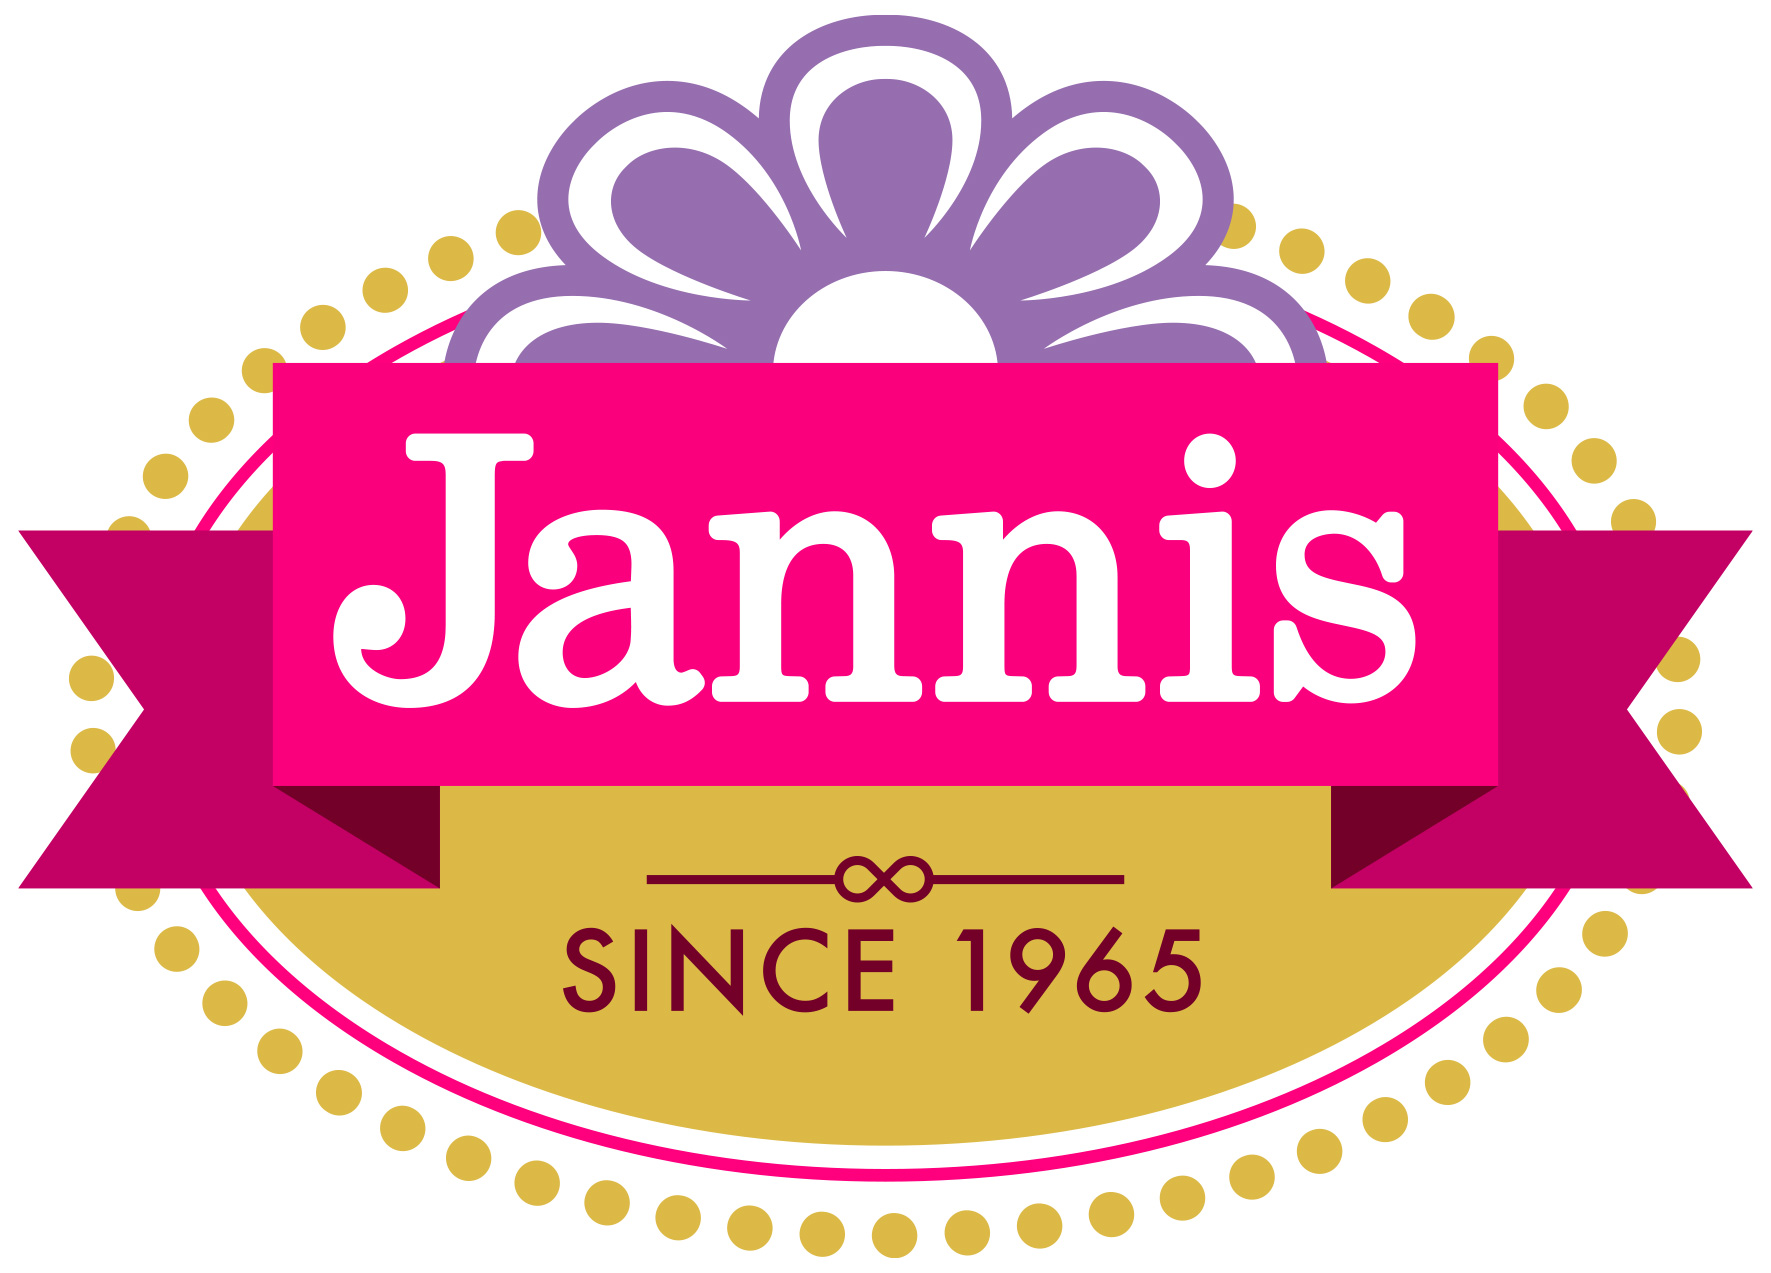 Jannis